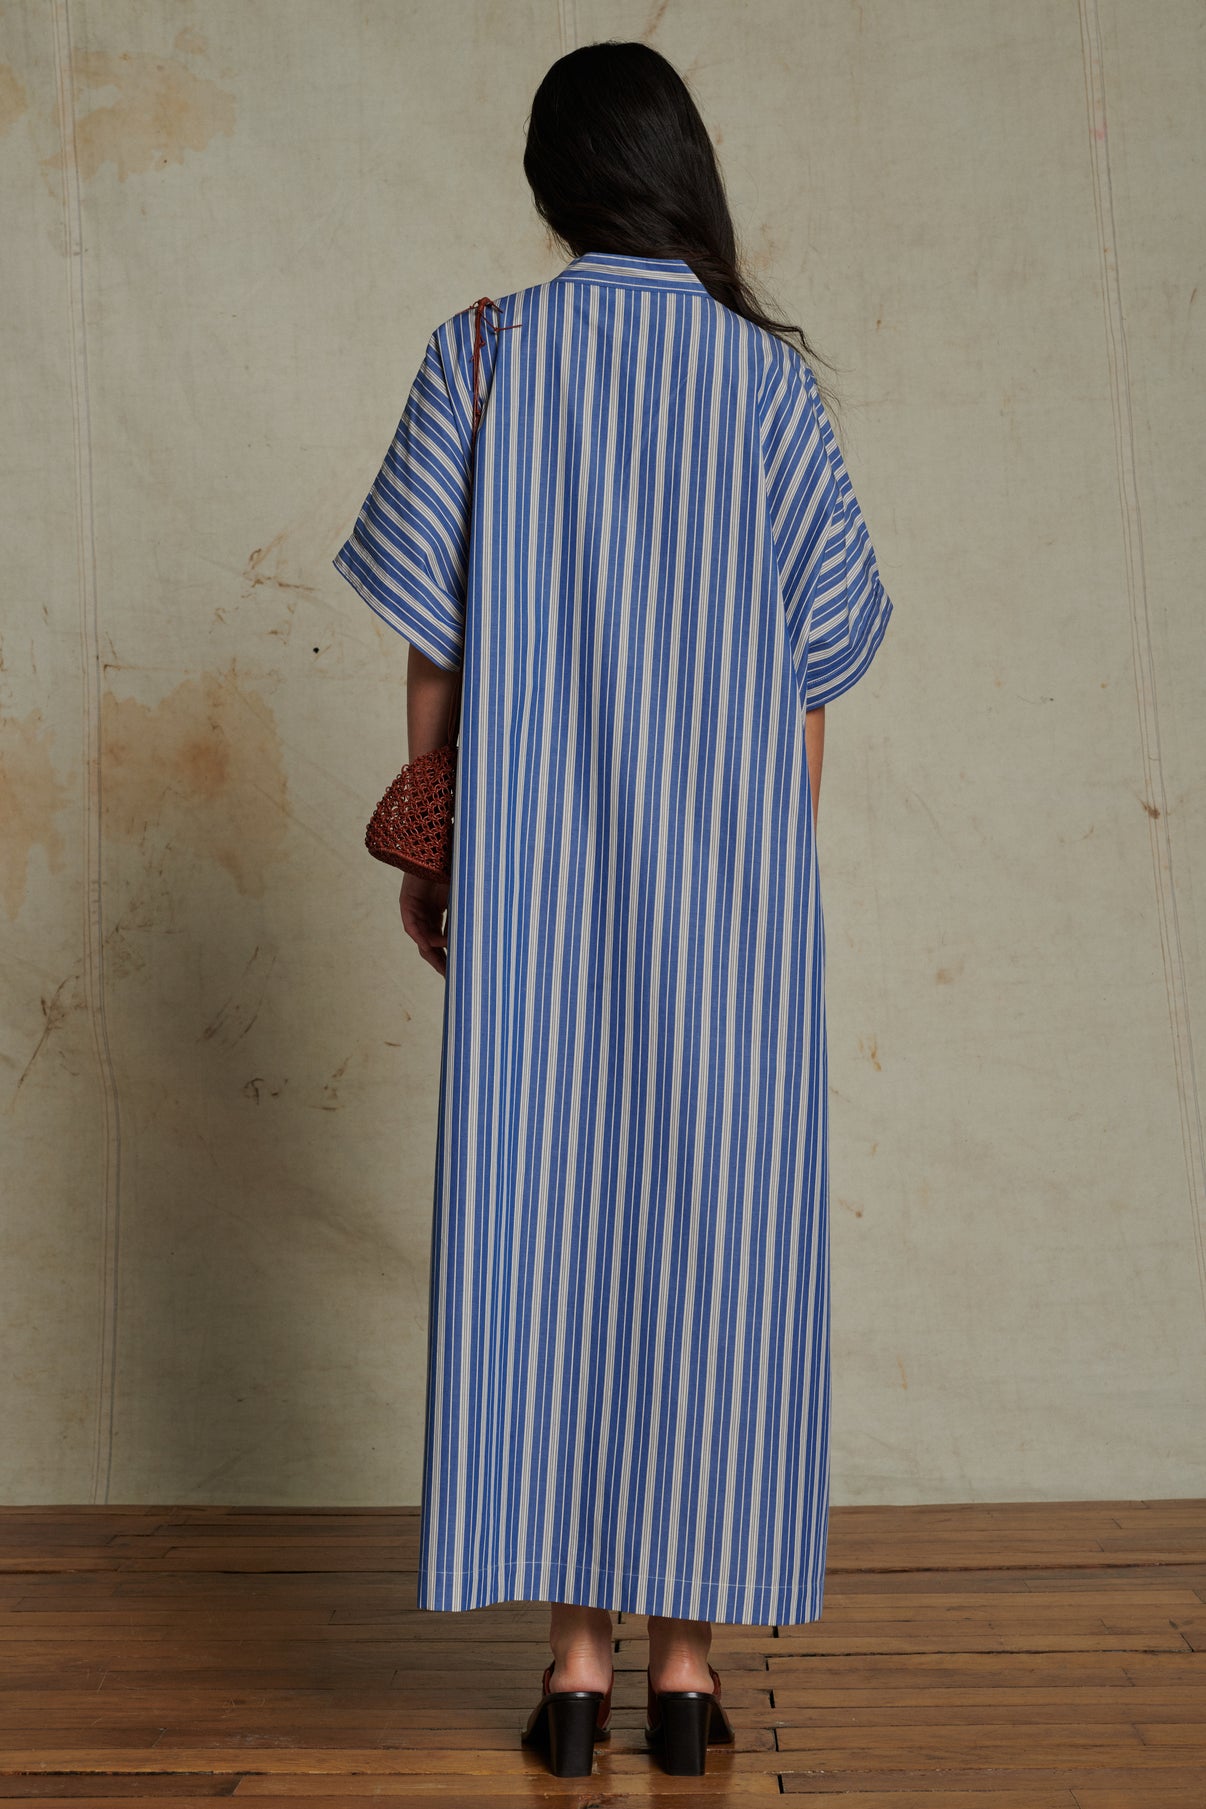 Robe Arcachon - Bleu/Blanc - Coton - Femme vue 2